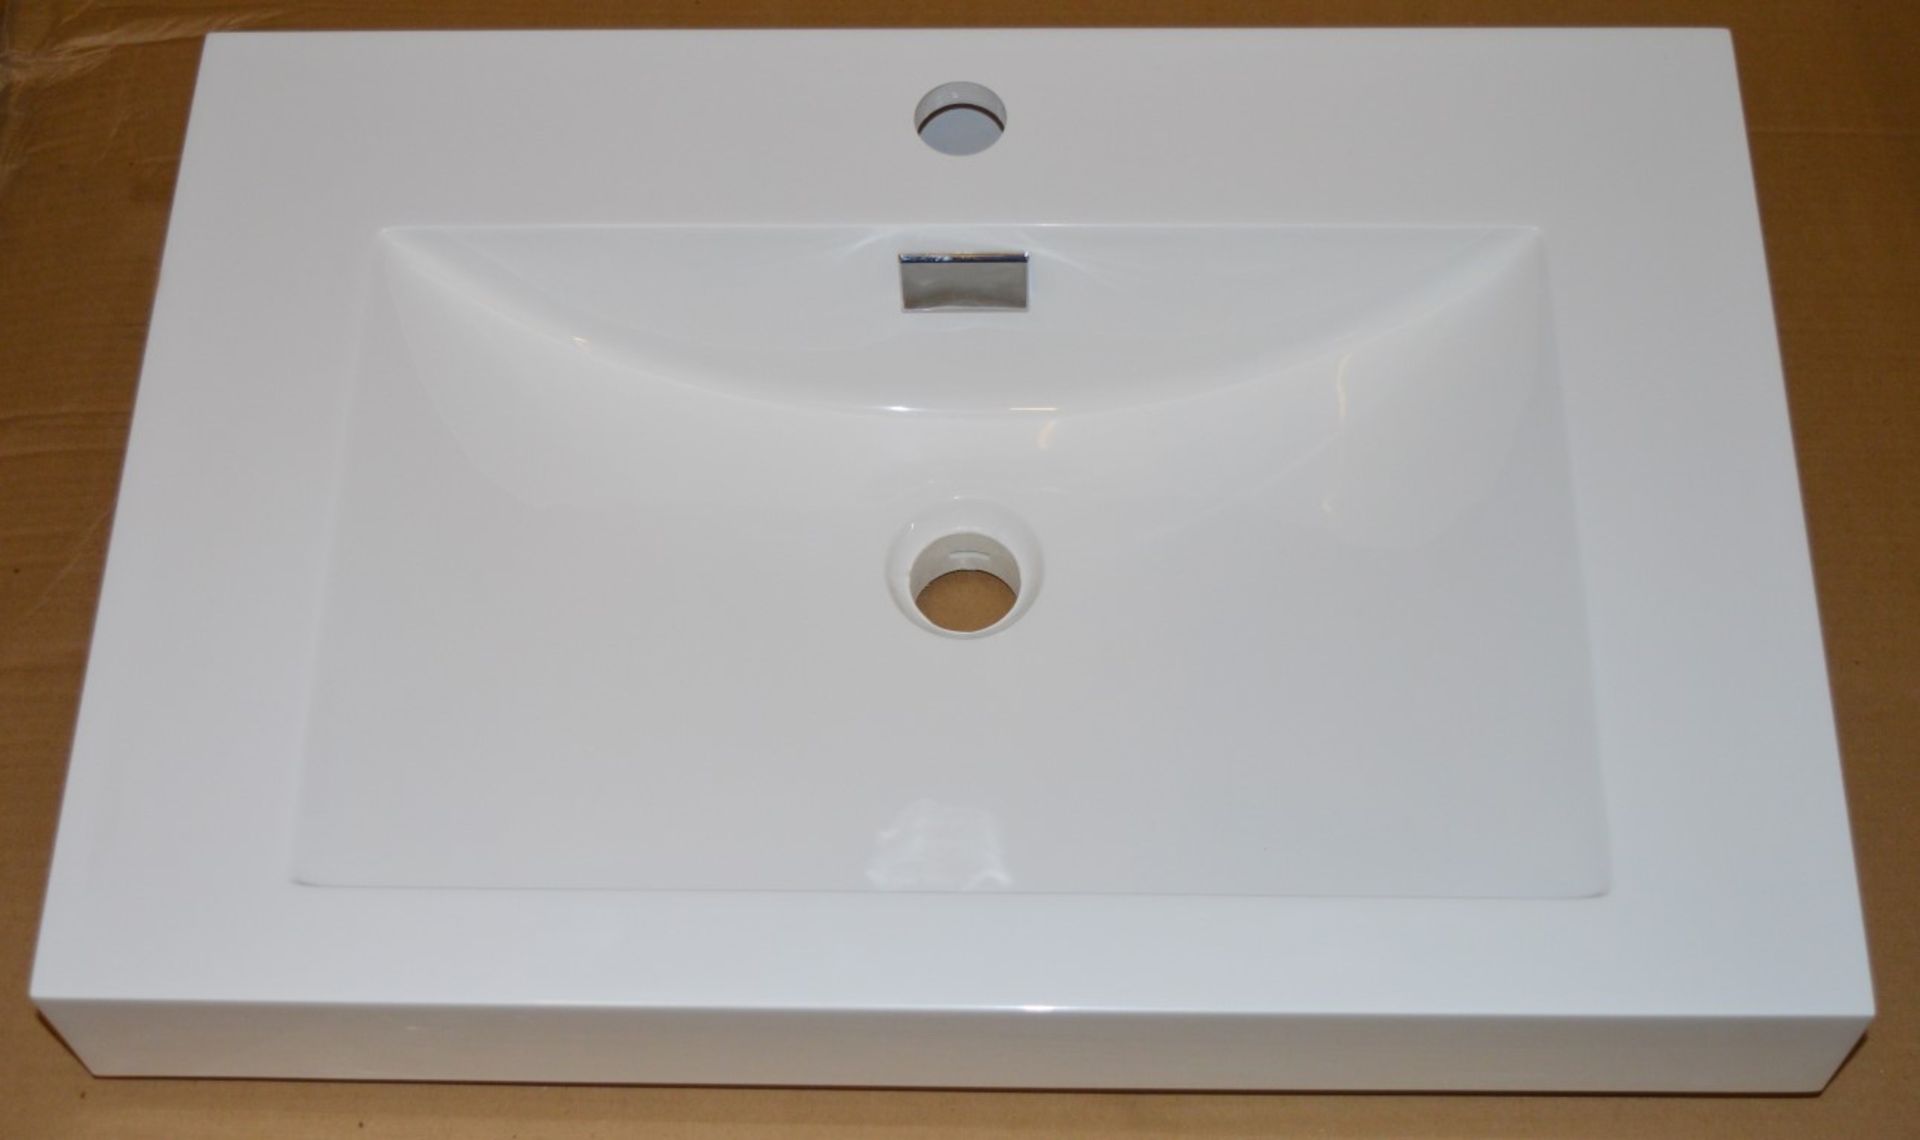 10 x Vogue Bathrooms JUNO Single Tap Hole Inset Sink Basins - 600mm Width - Product Code 1VFJU60 - - Image 7 of 7